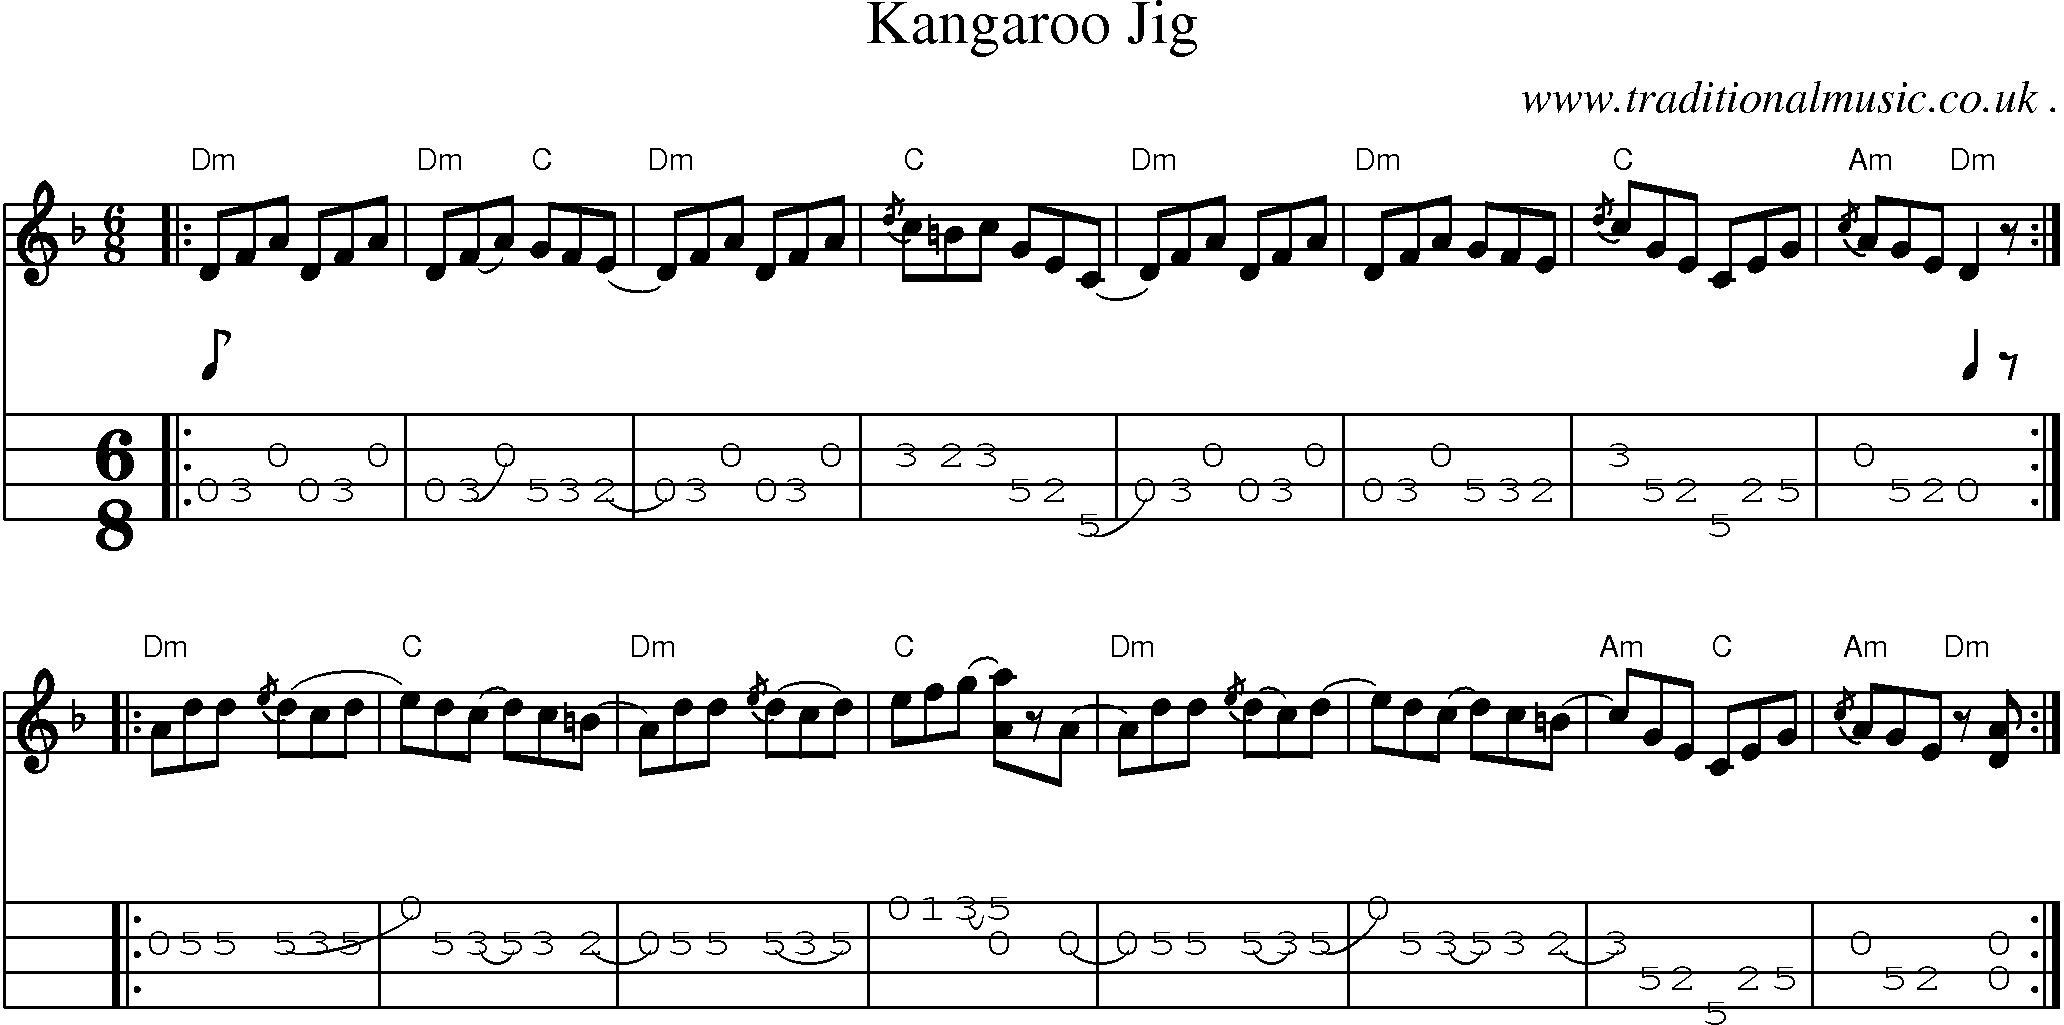 Sheet-music  score, Chords and Mandolin Tabs for Kangaroo Jig